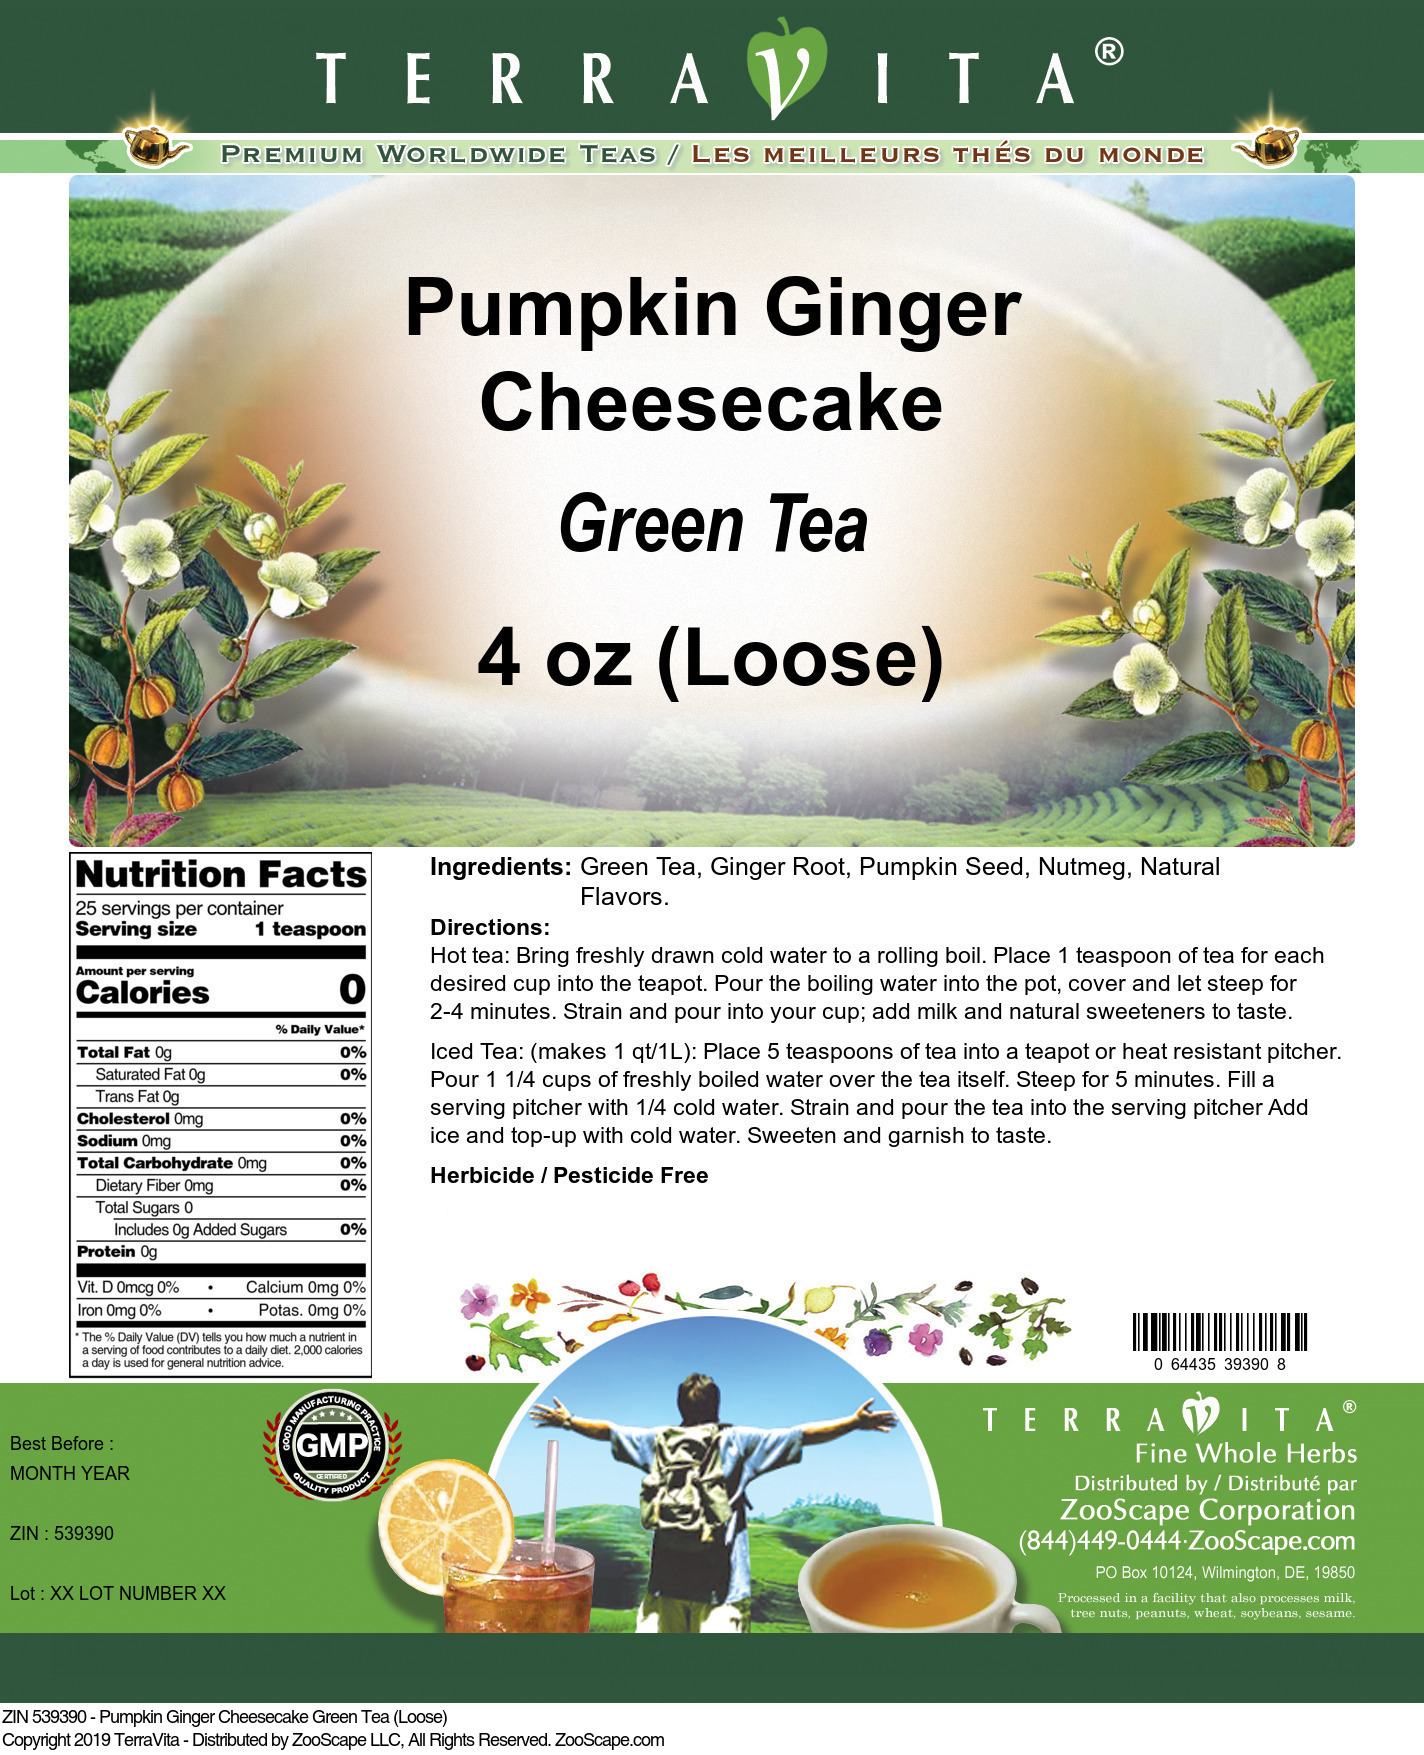 Pumpkin Ginger Cheesecake Green Tea (Loose) - Label